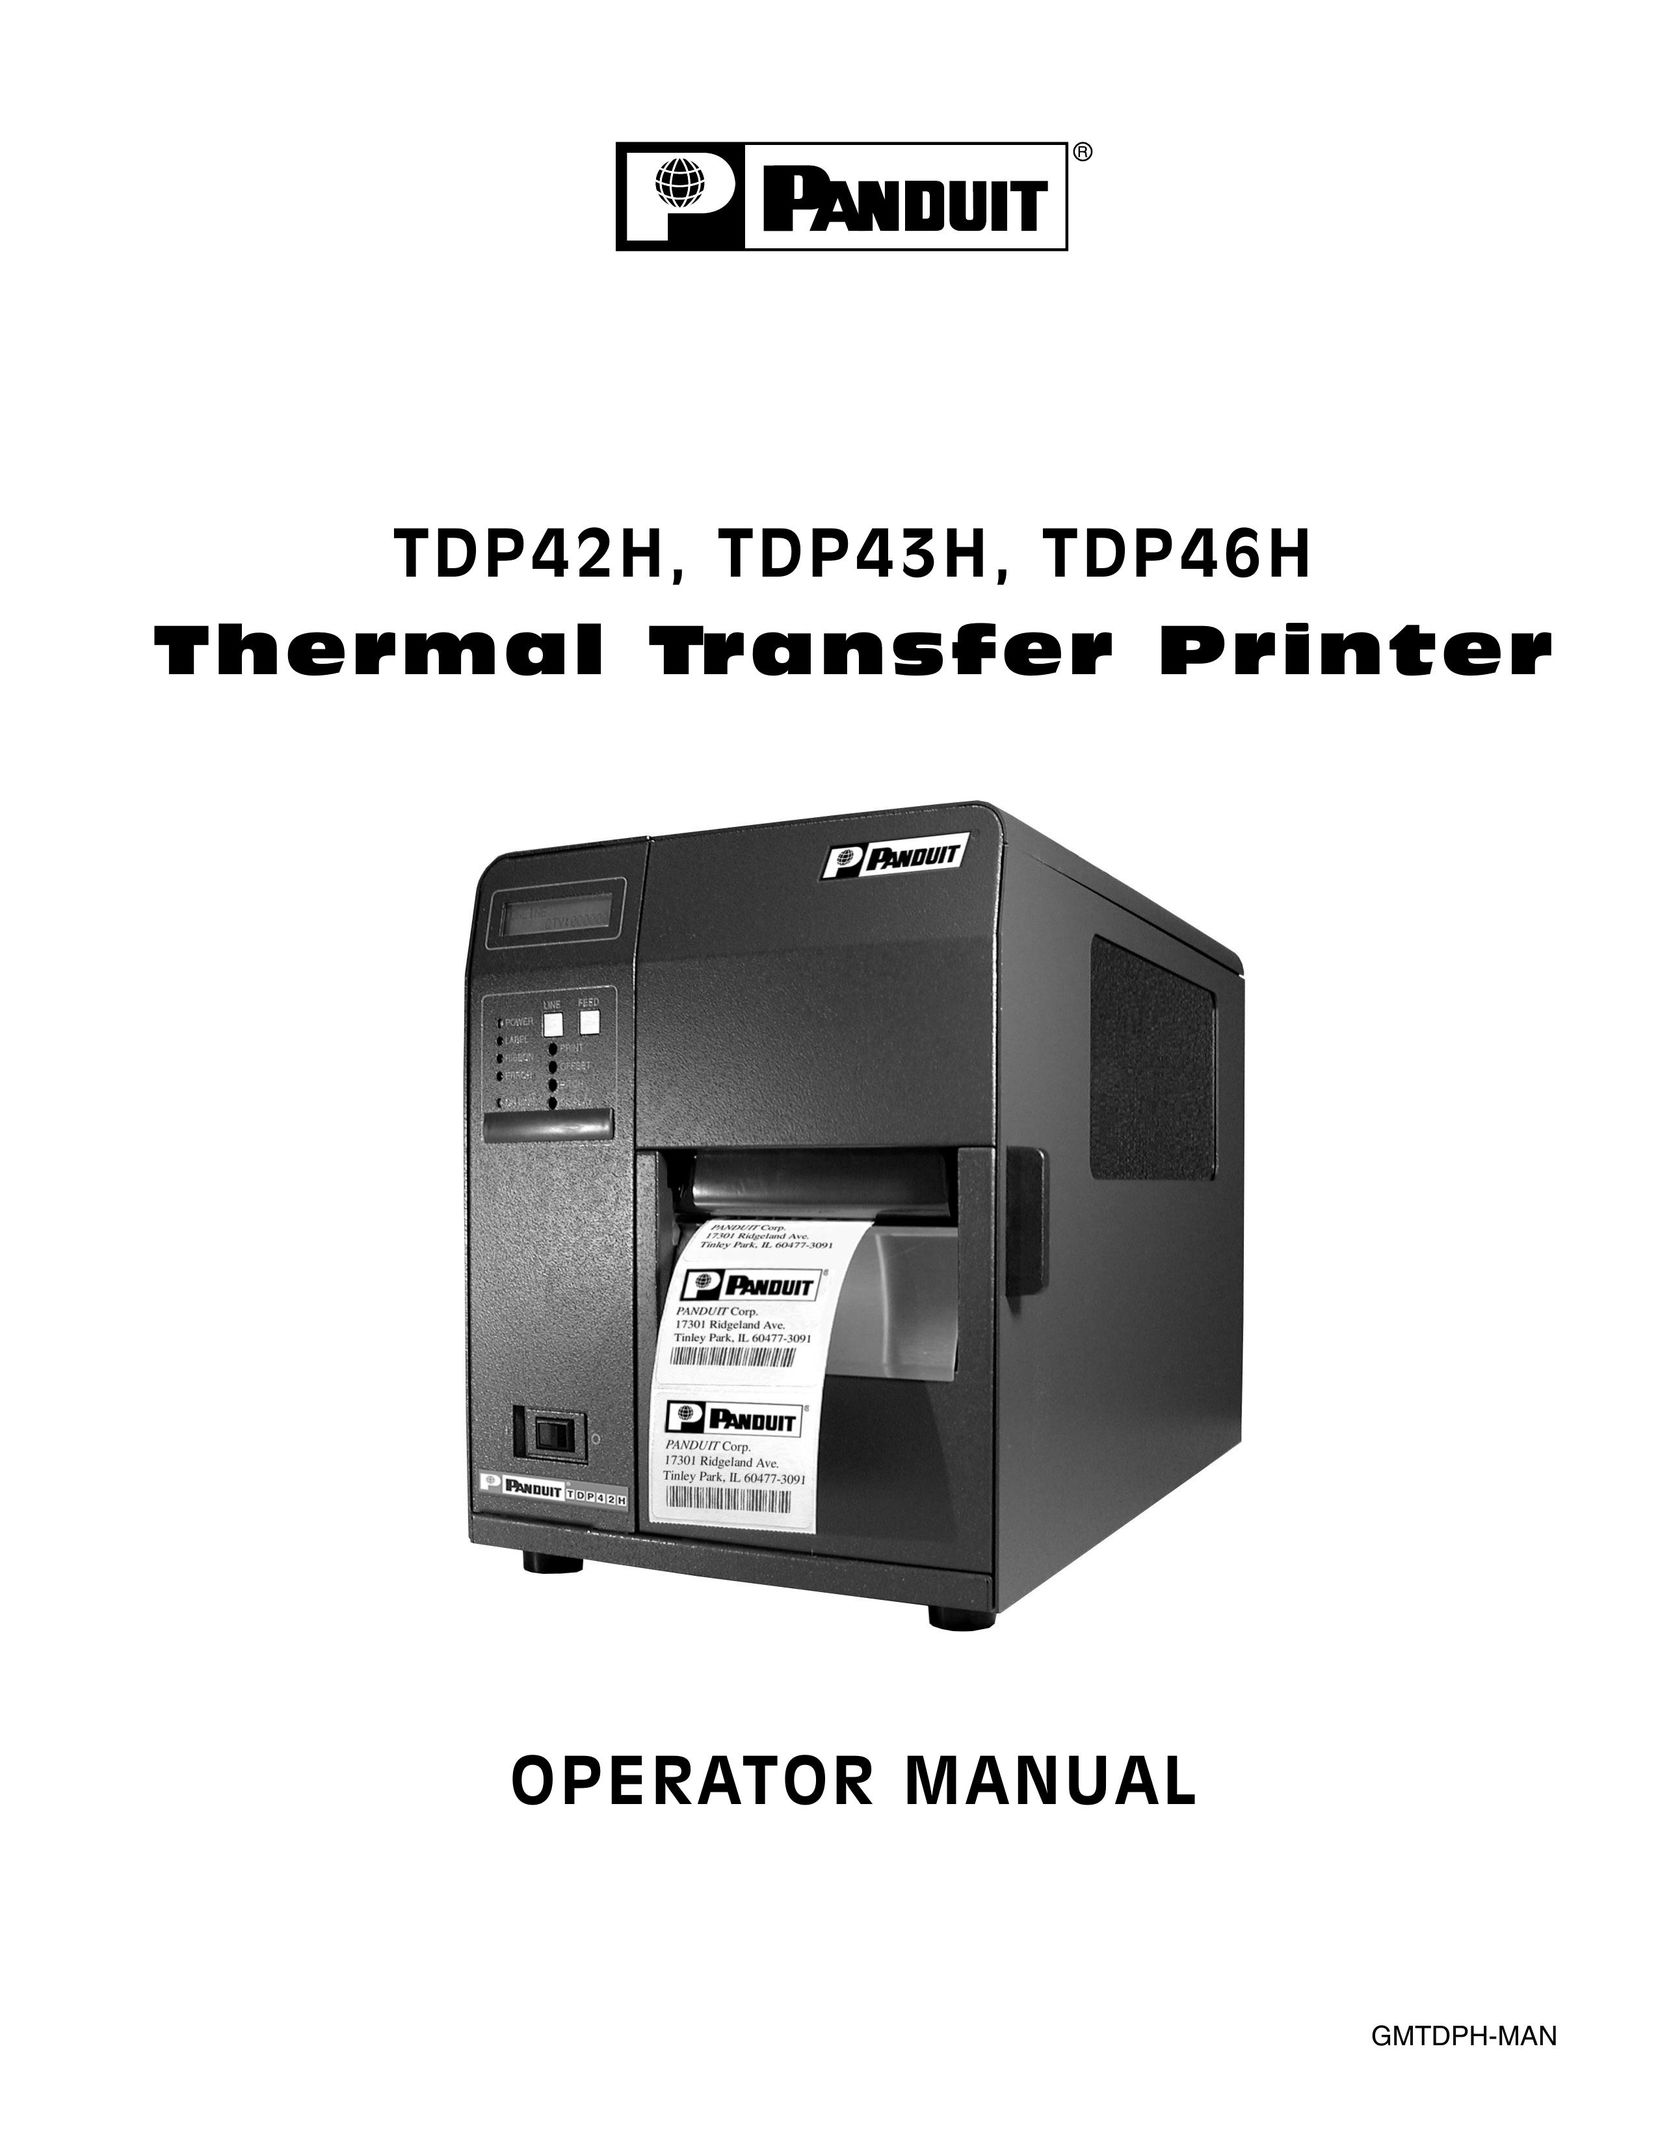 Panduit TDP46H Printer User Manual